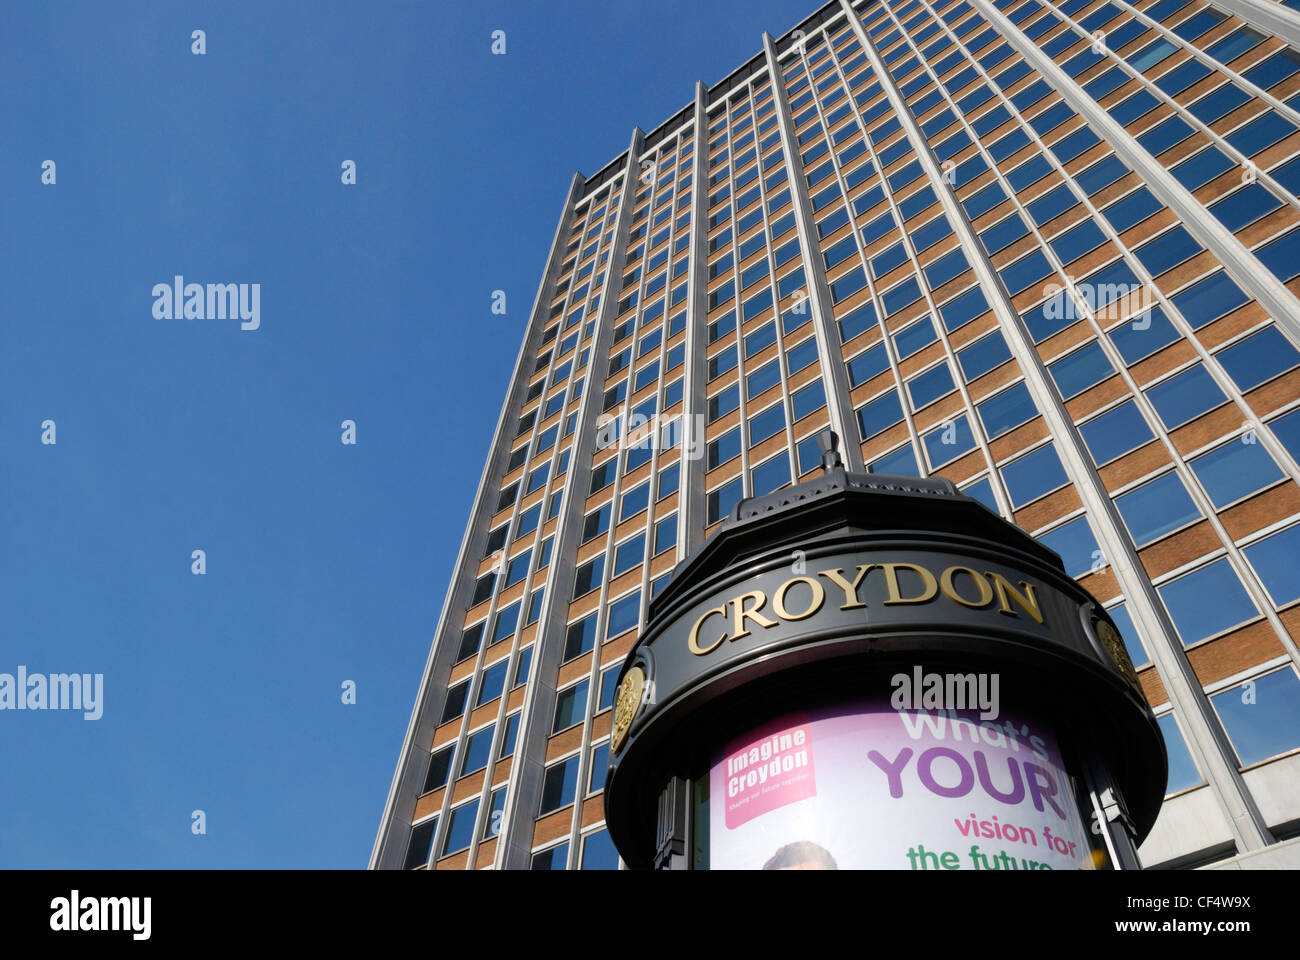 A Croydon sign below the Nestle headquarters building. Stock Photo